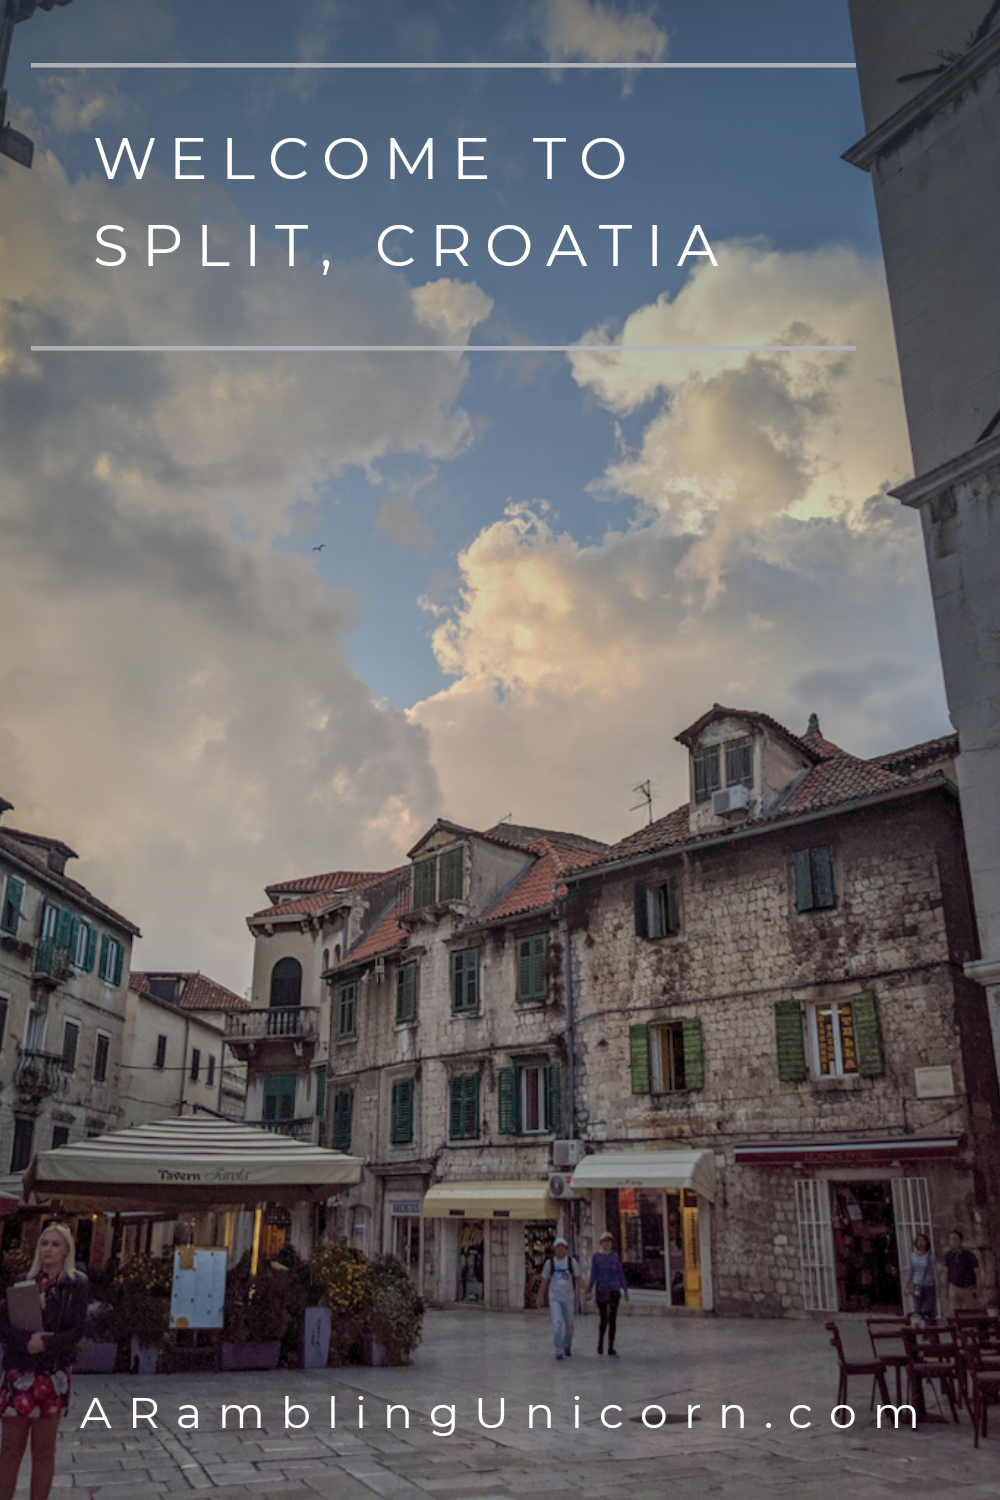 We start our 3-year vagabonding journey in Split, Croatia.